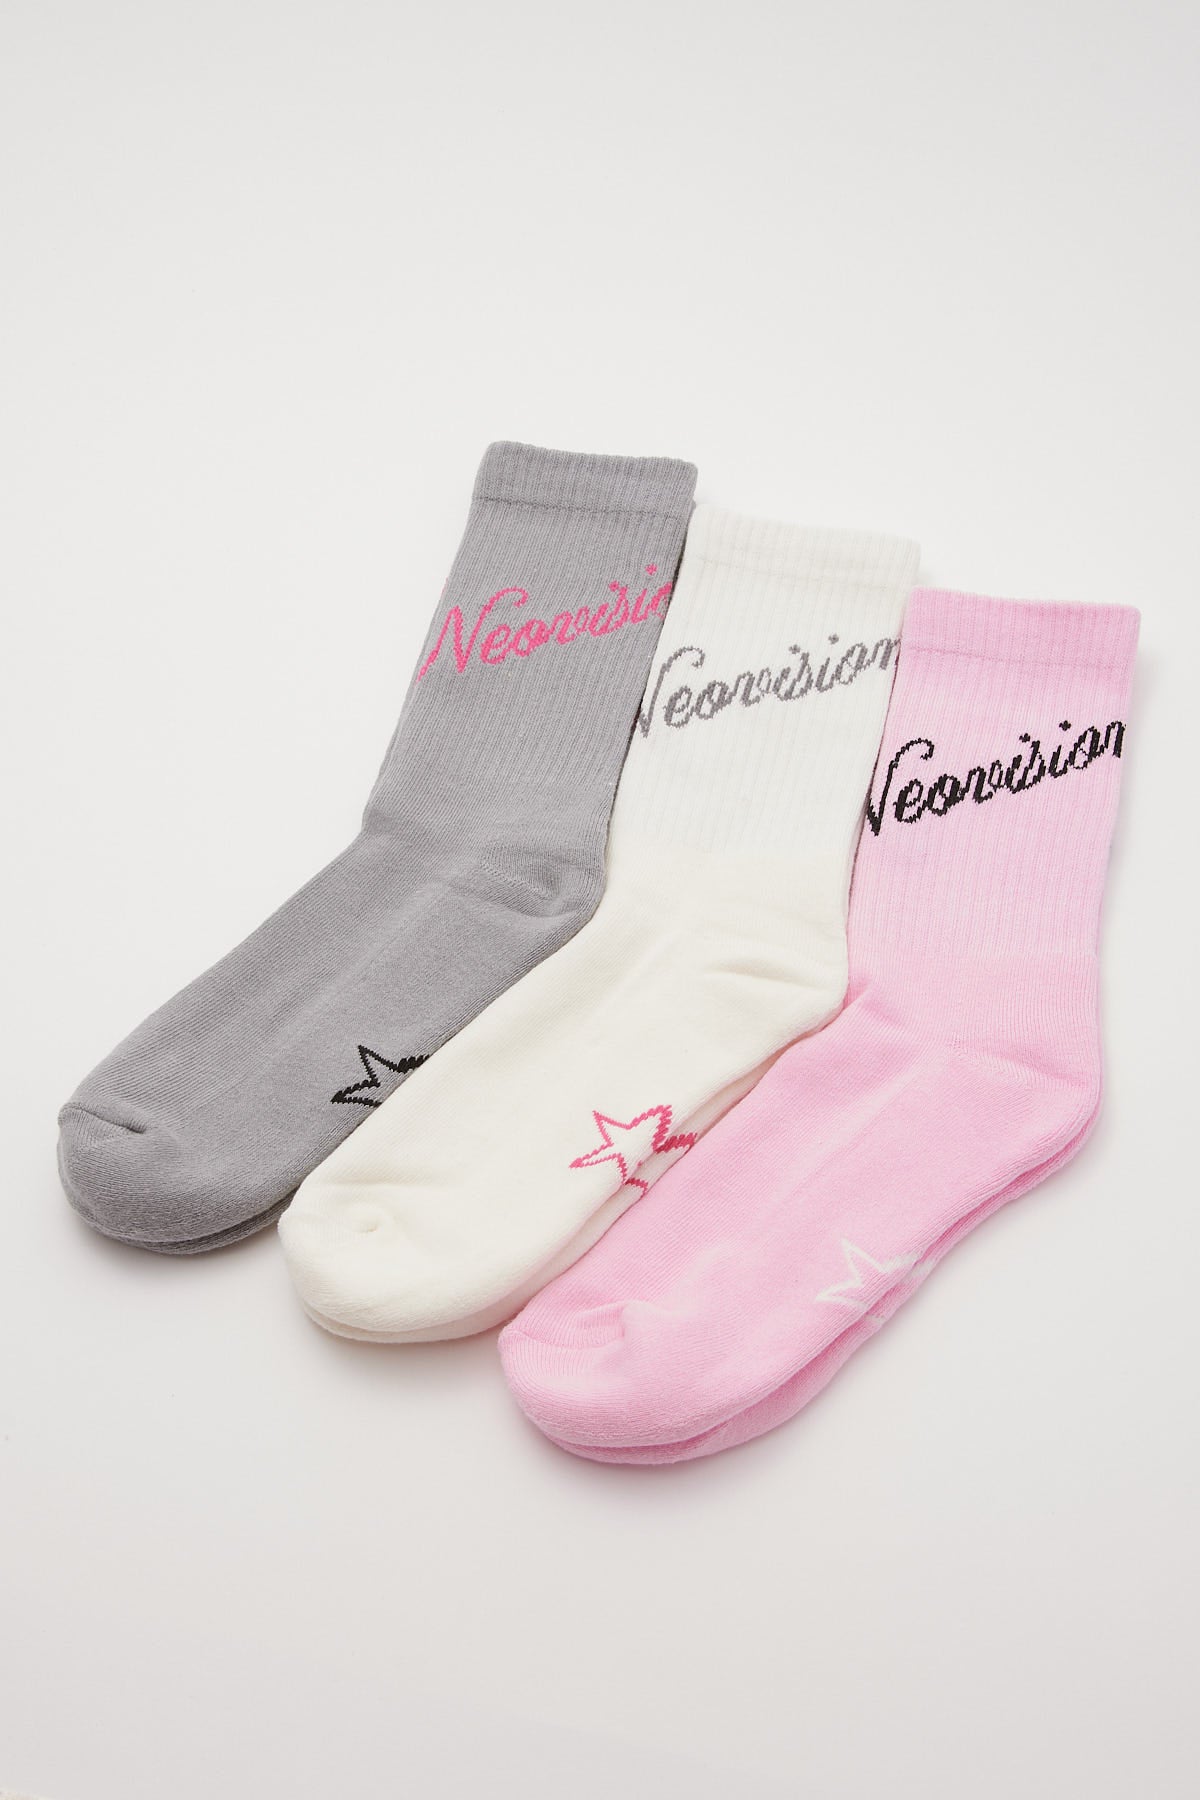 Neovision Heavenly Sock 3 Pack Cream/Pink/GRey